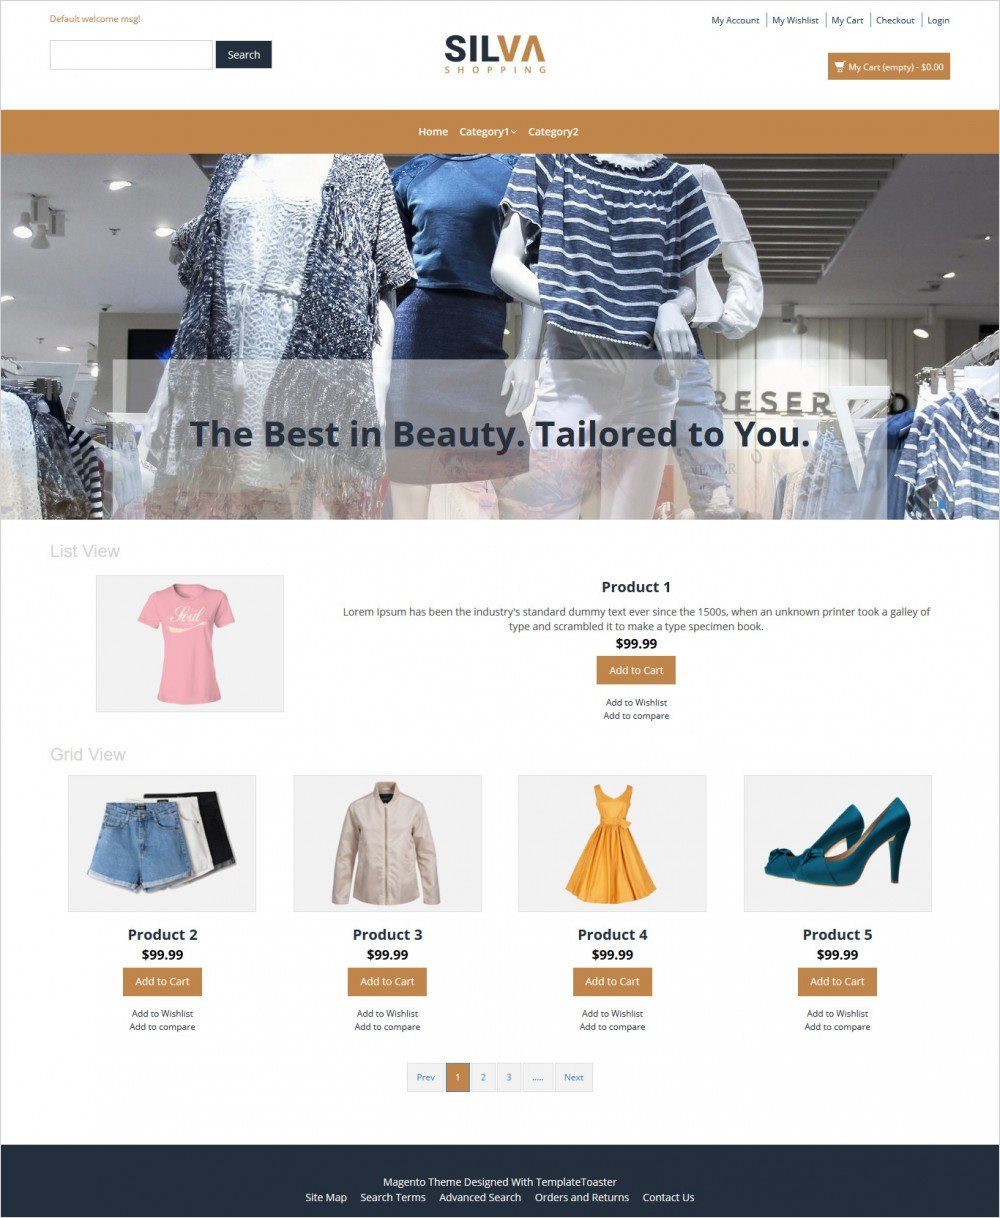 silva clothing store responsive magento theme